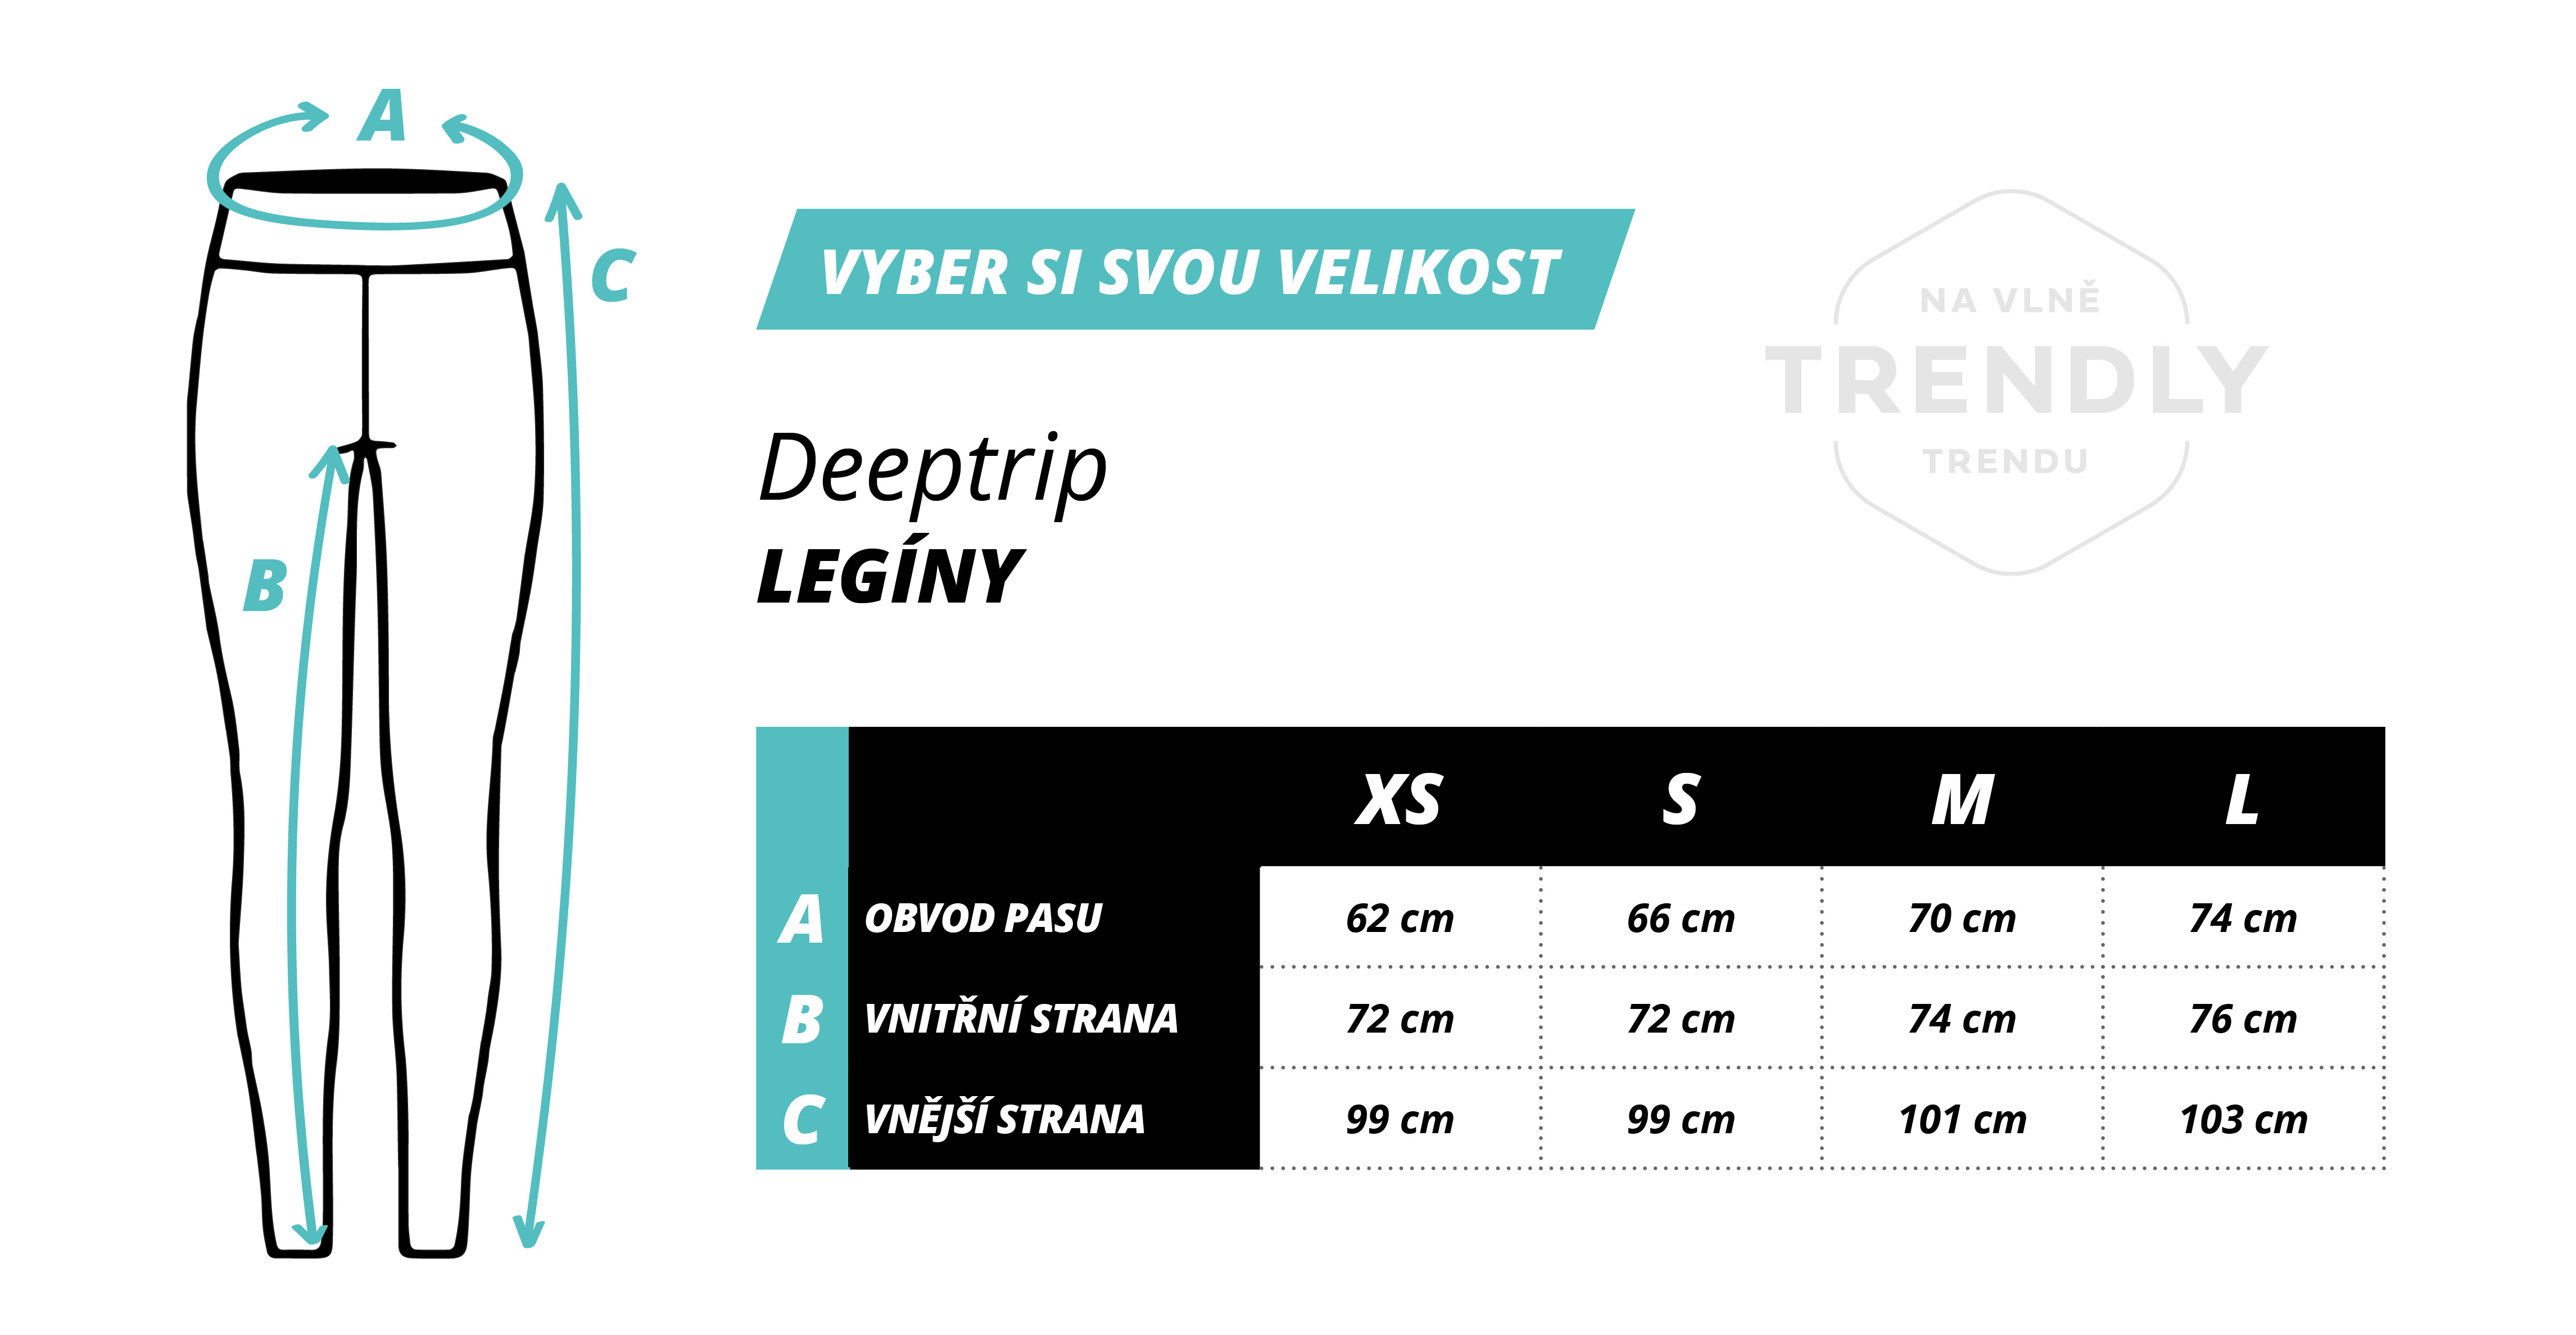 trendly_velikosti_leginy_deeptrip